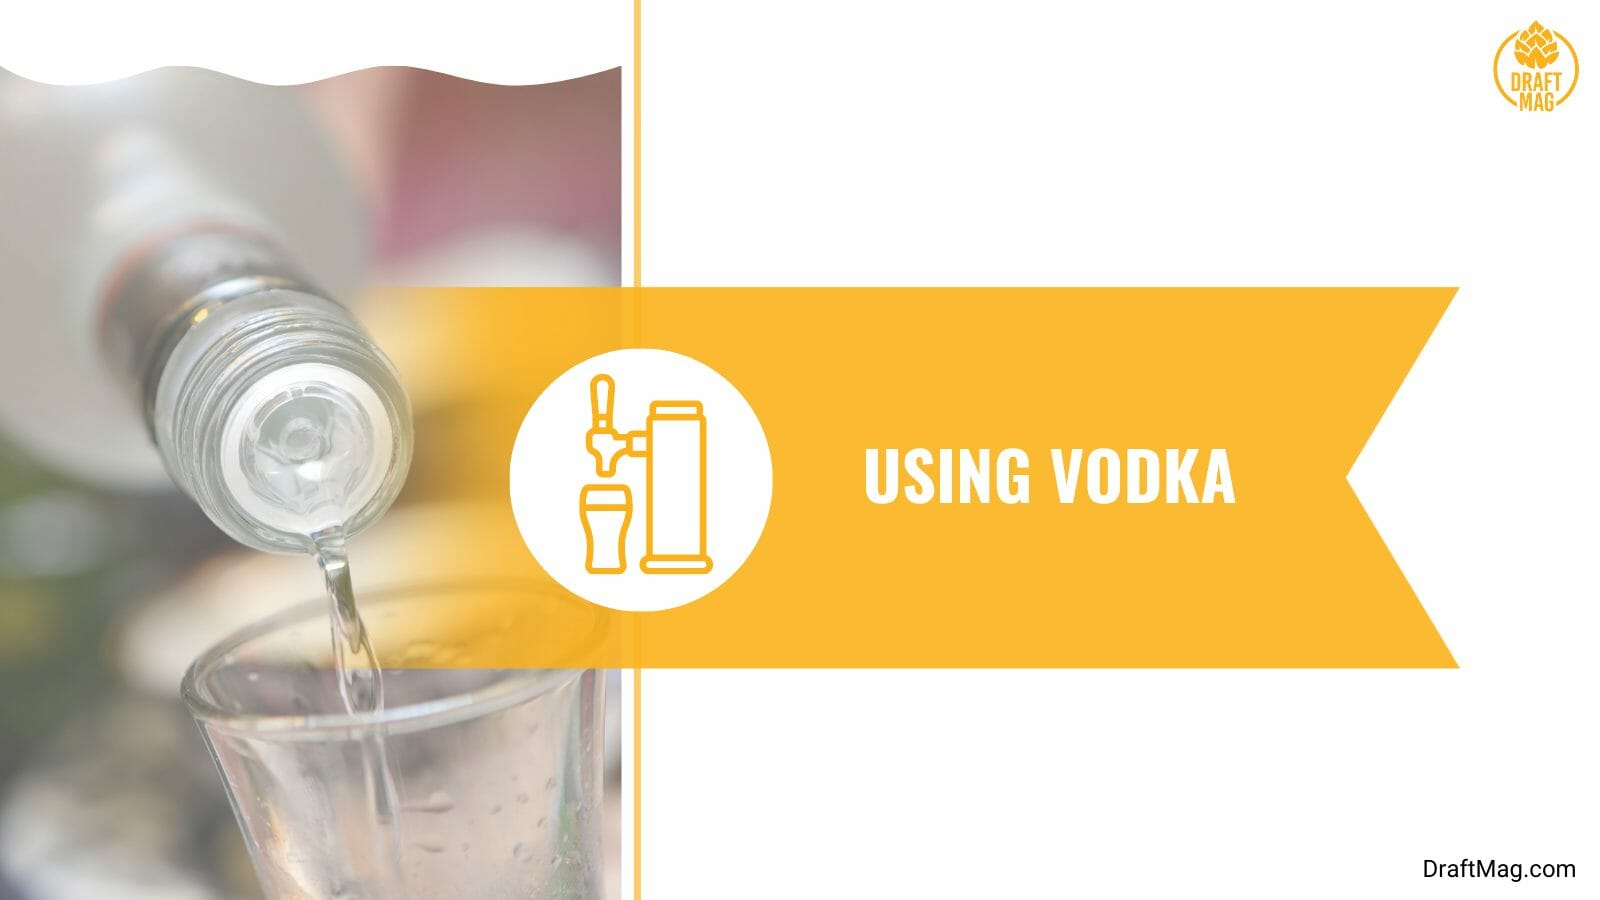 Using vodka